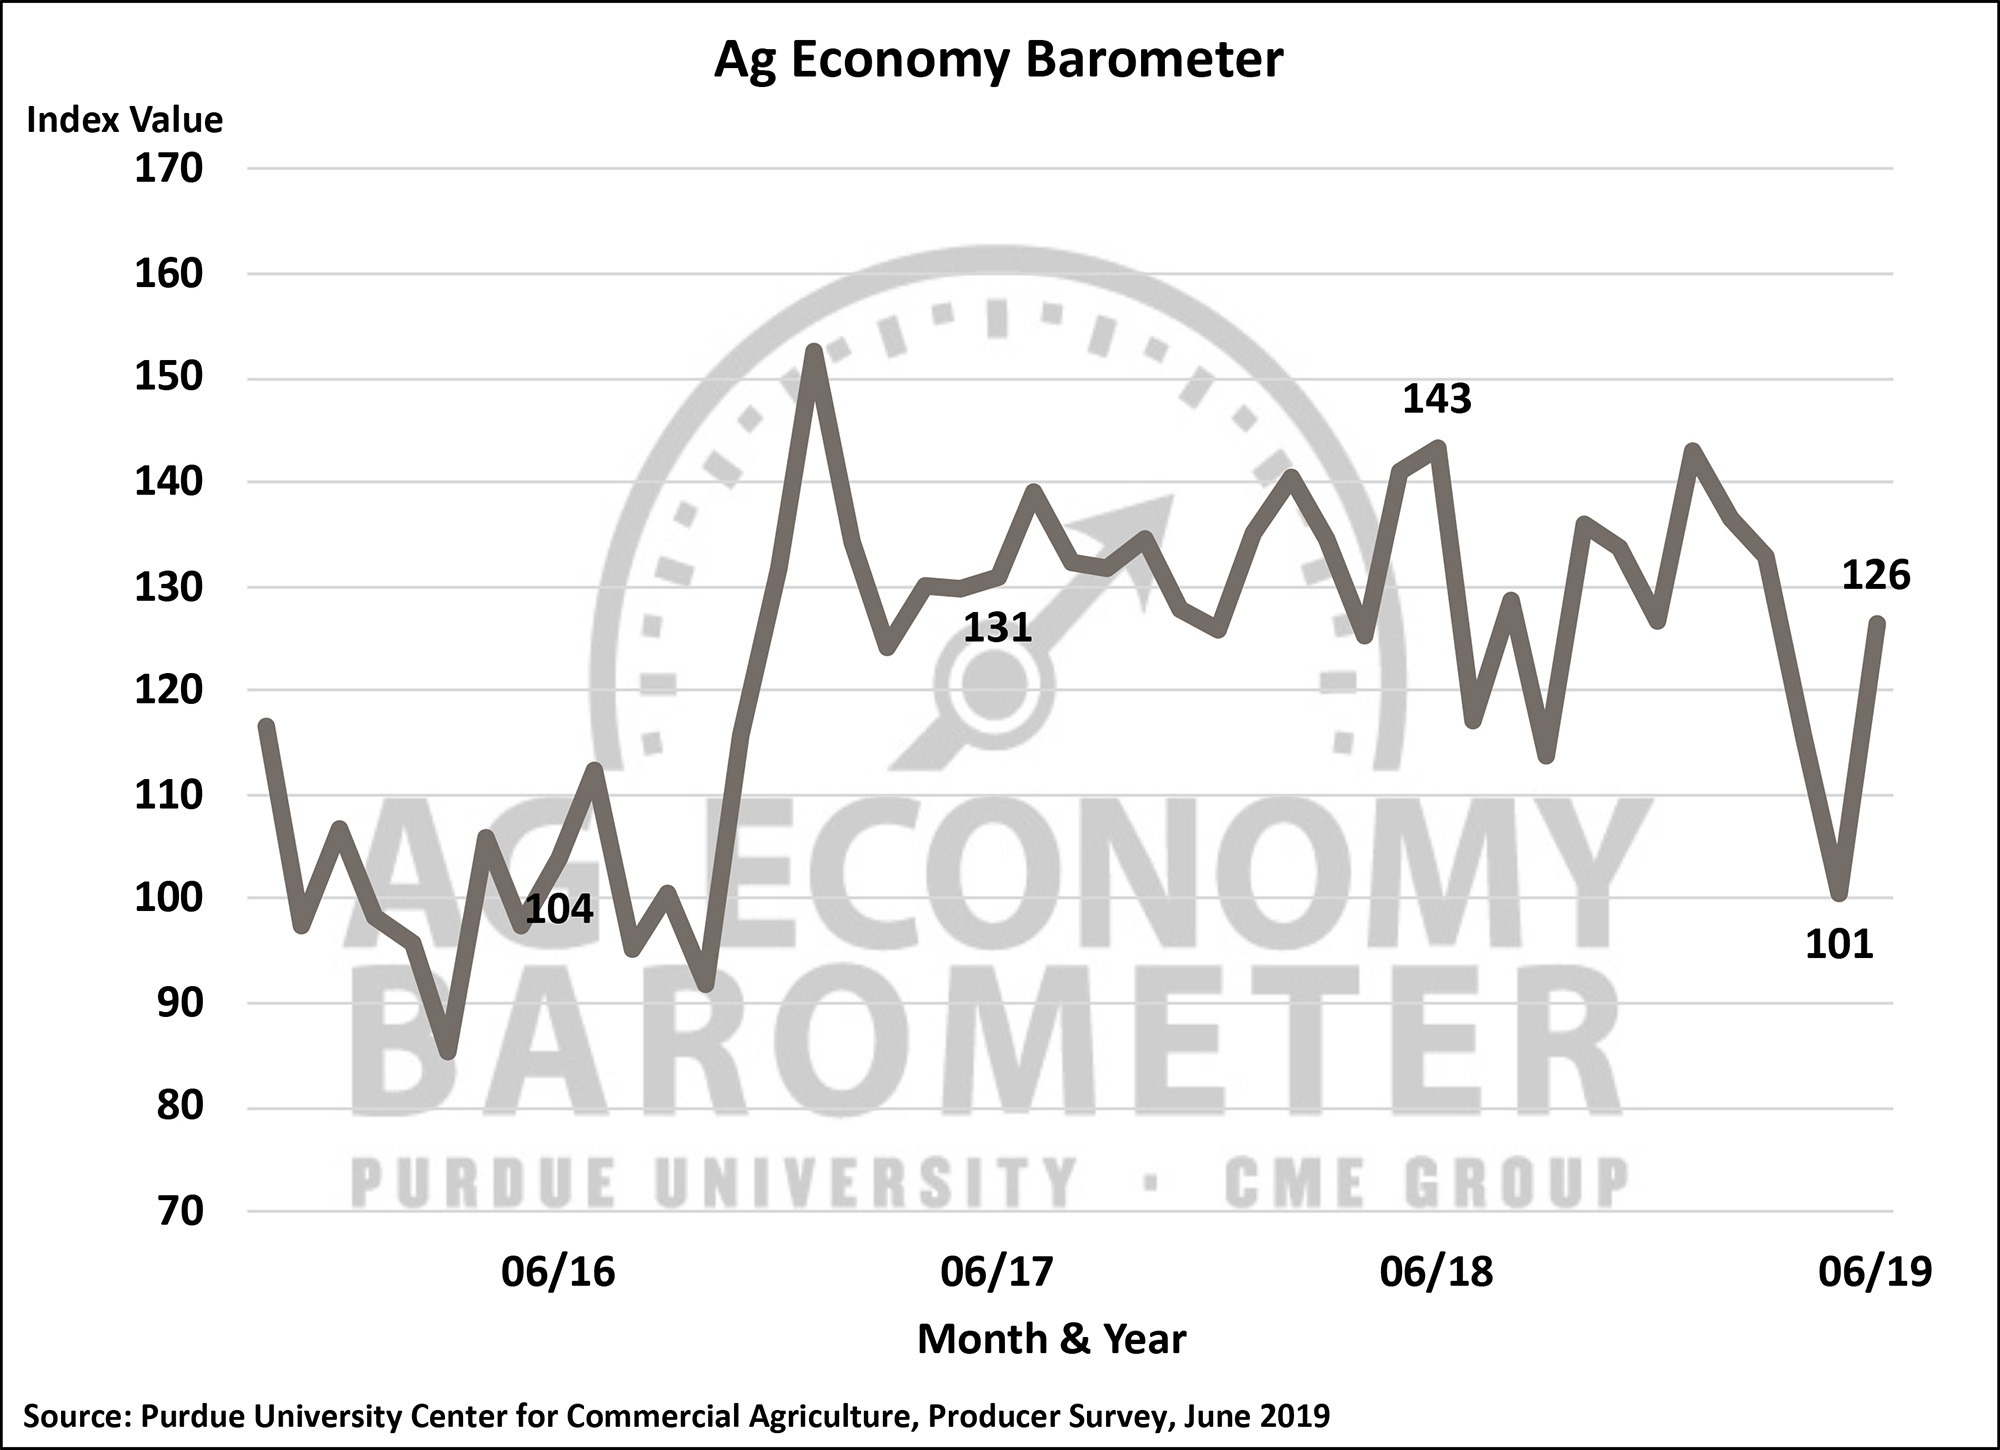 Rising crop prices and USDA payment announcements lift farmer sentiment, despite uncertain economic environment.